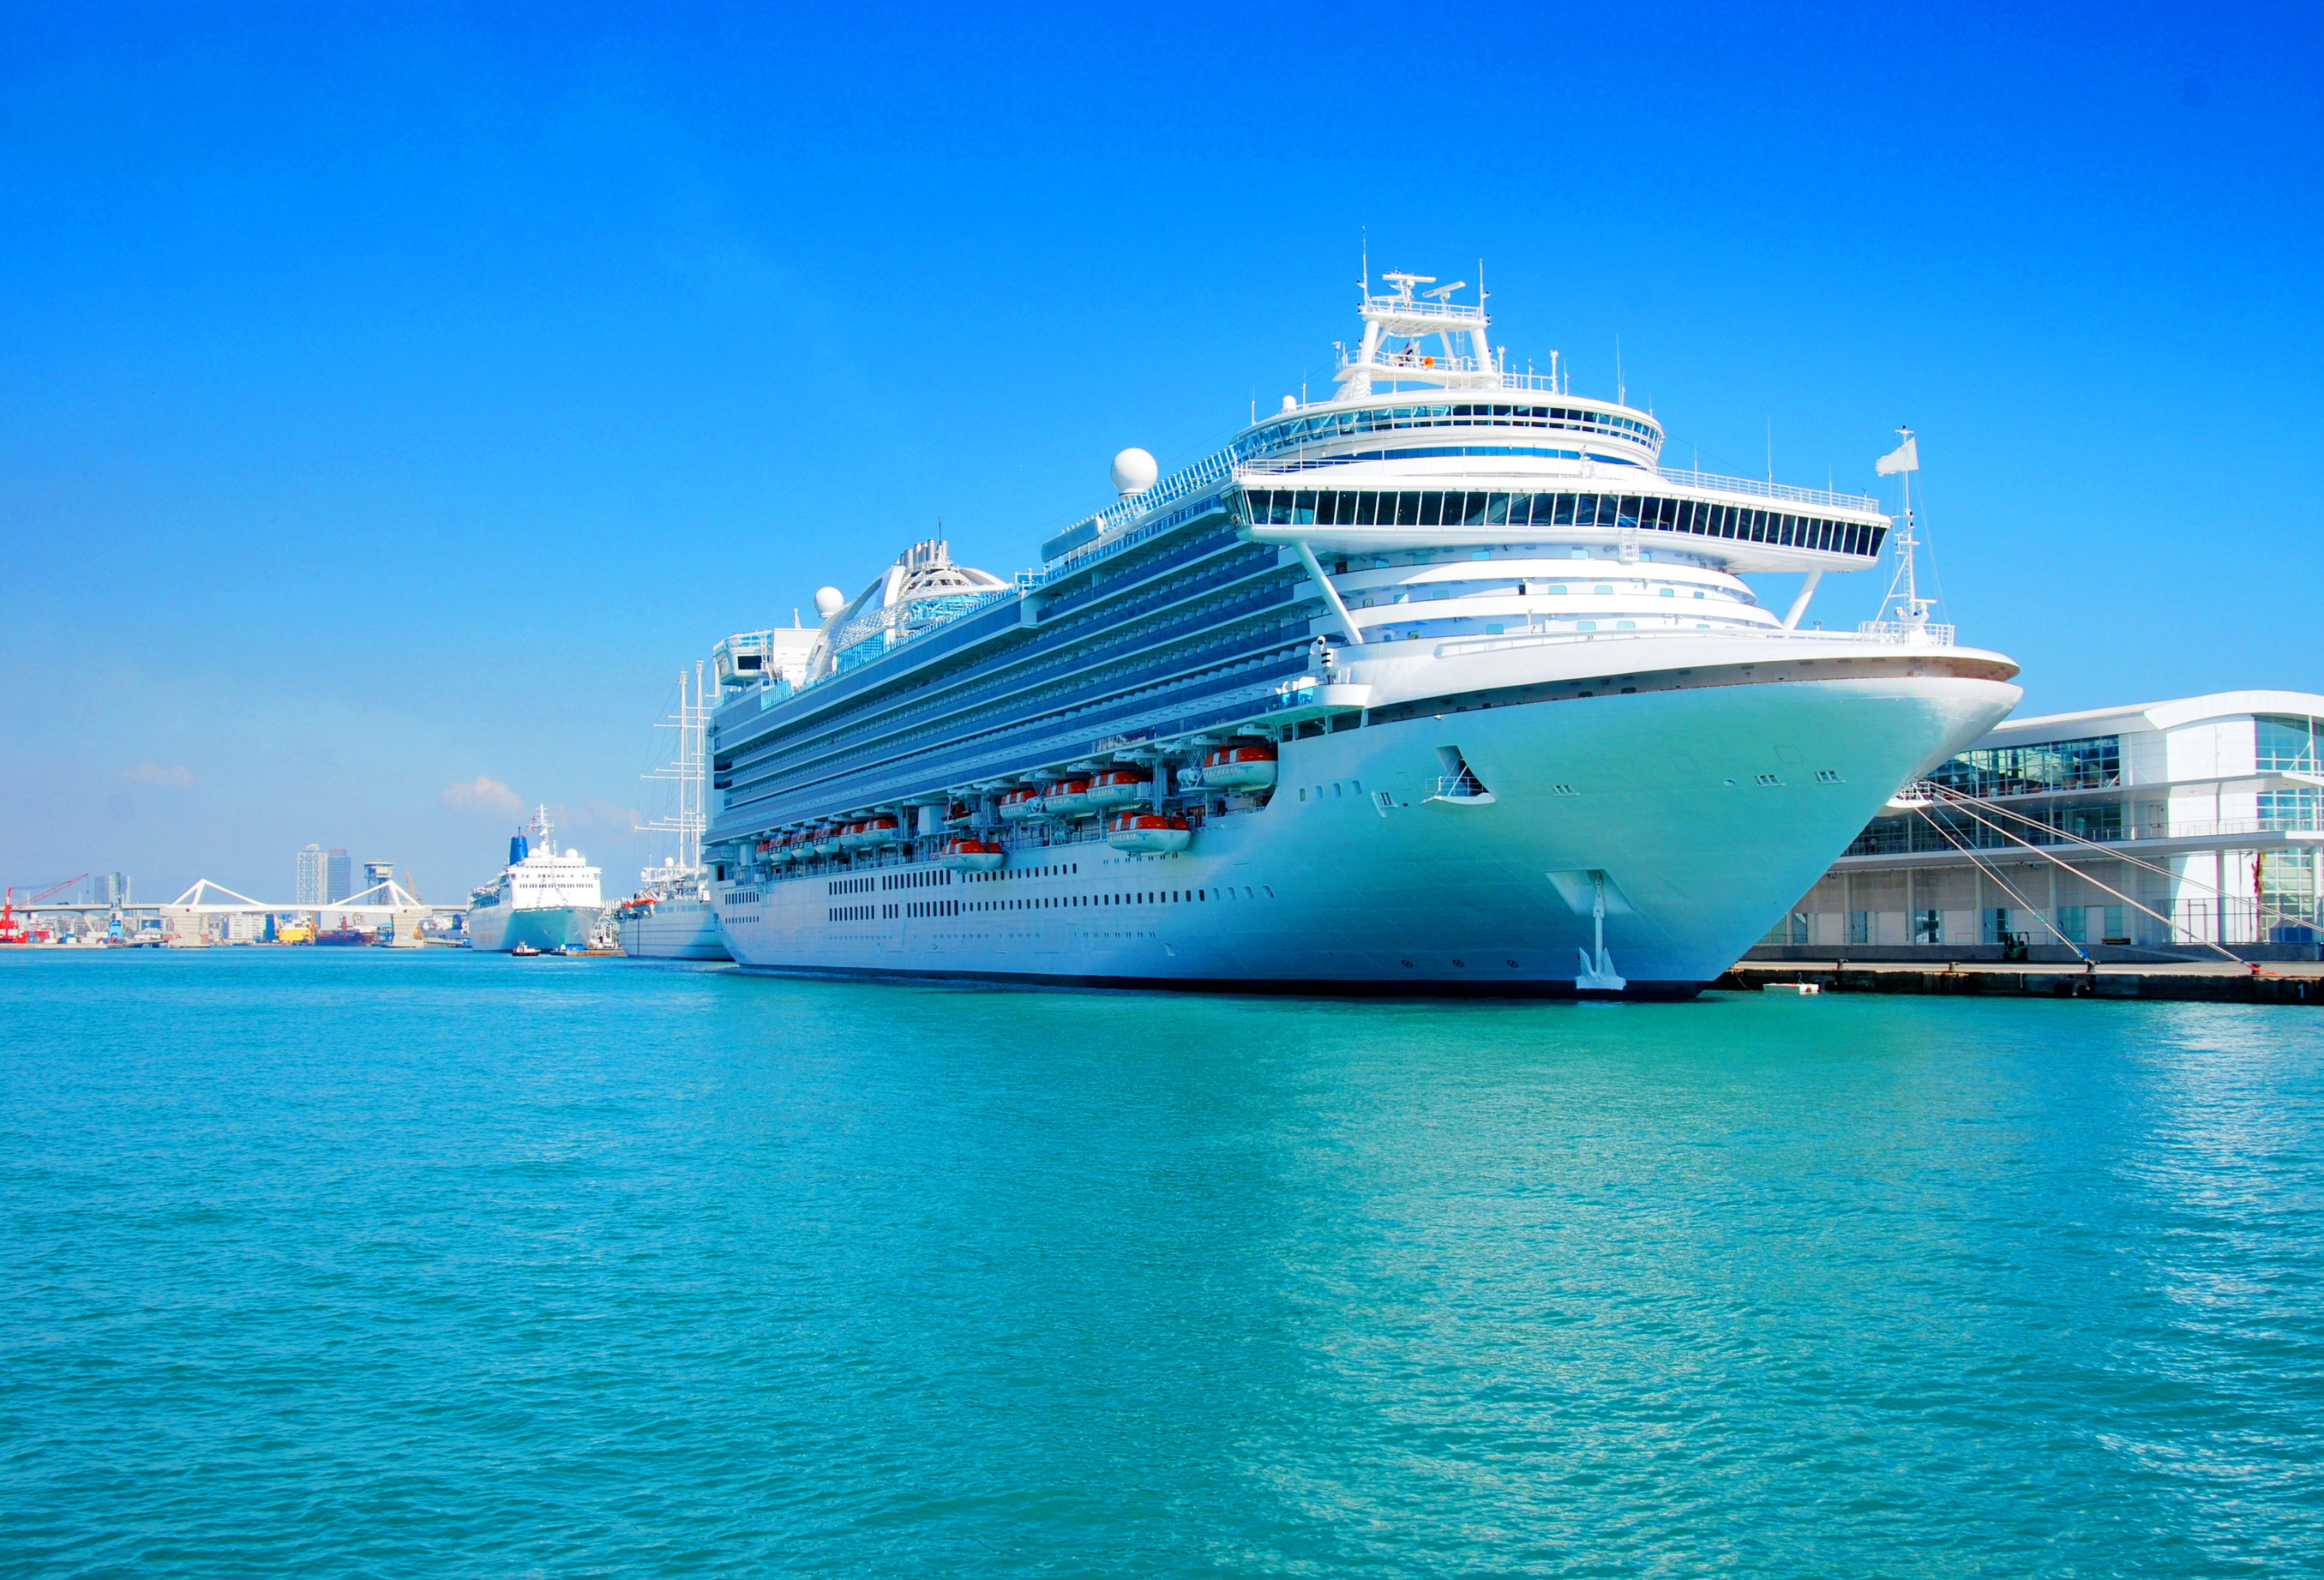 Cruise Critic: 4-night cruises from $249